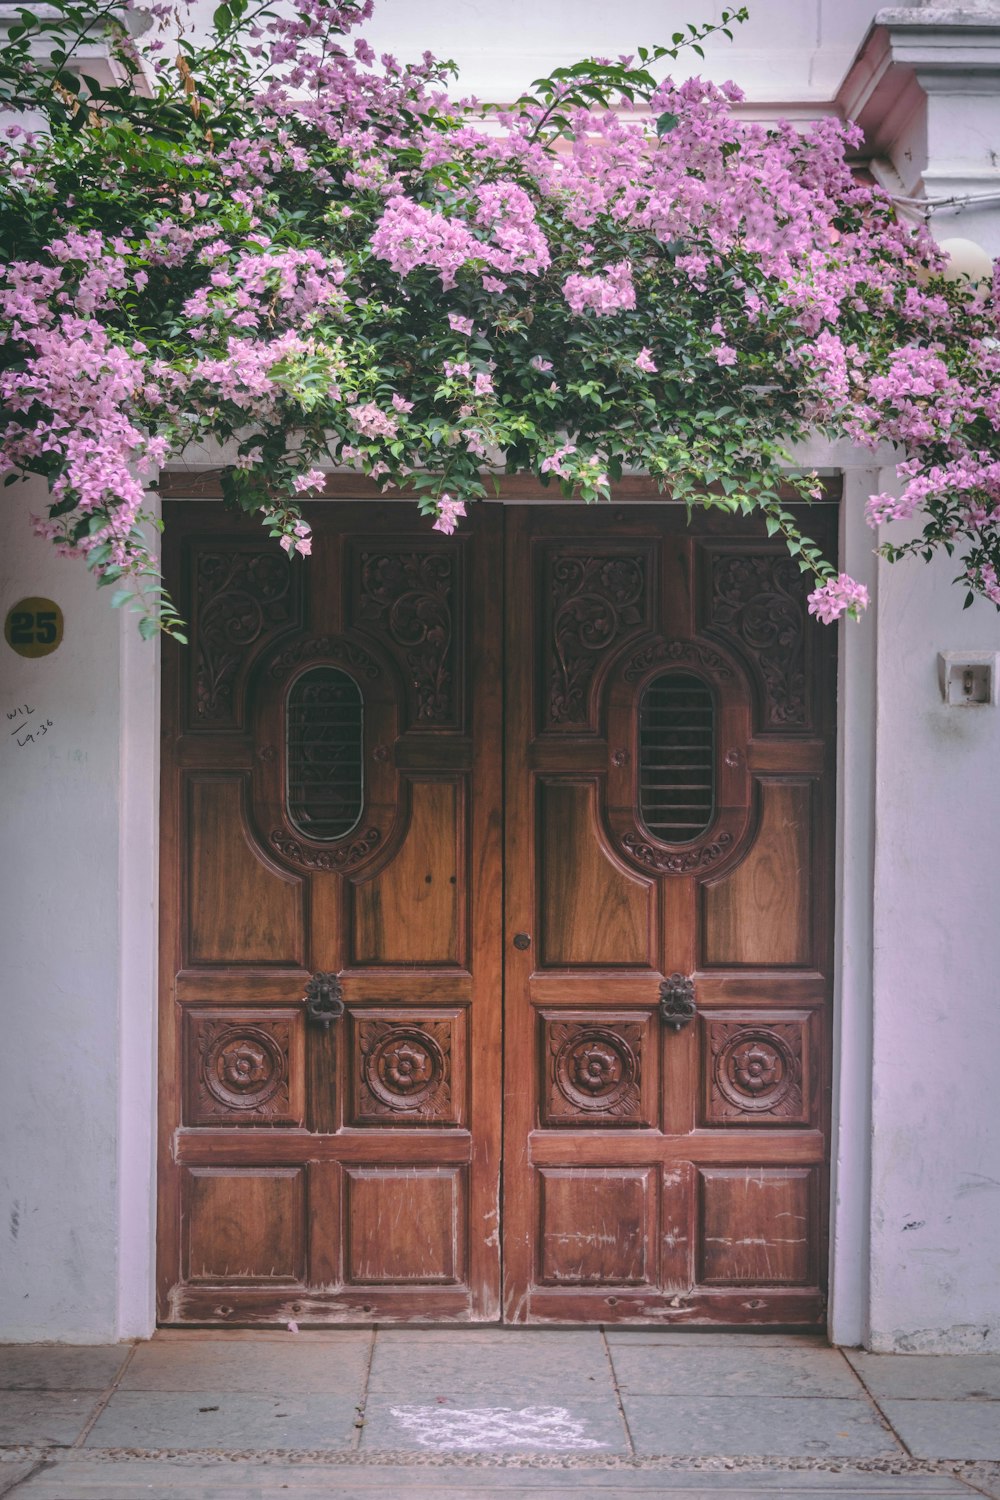 pink bougainvillea flowers above closed doors